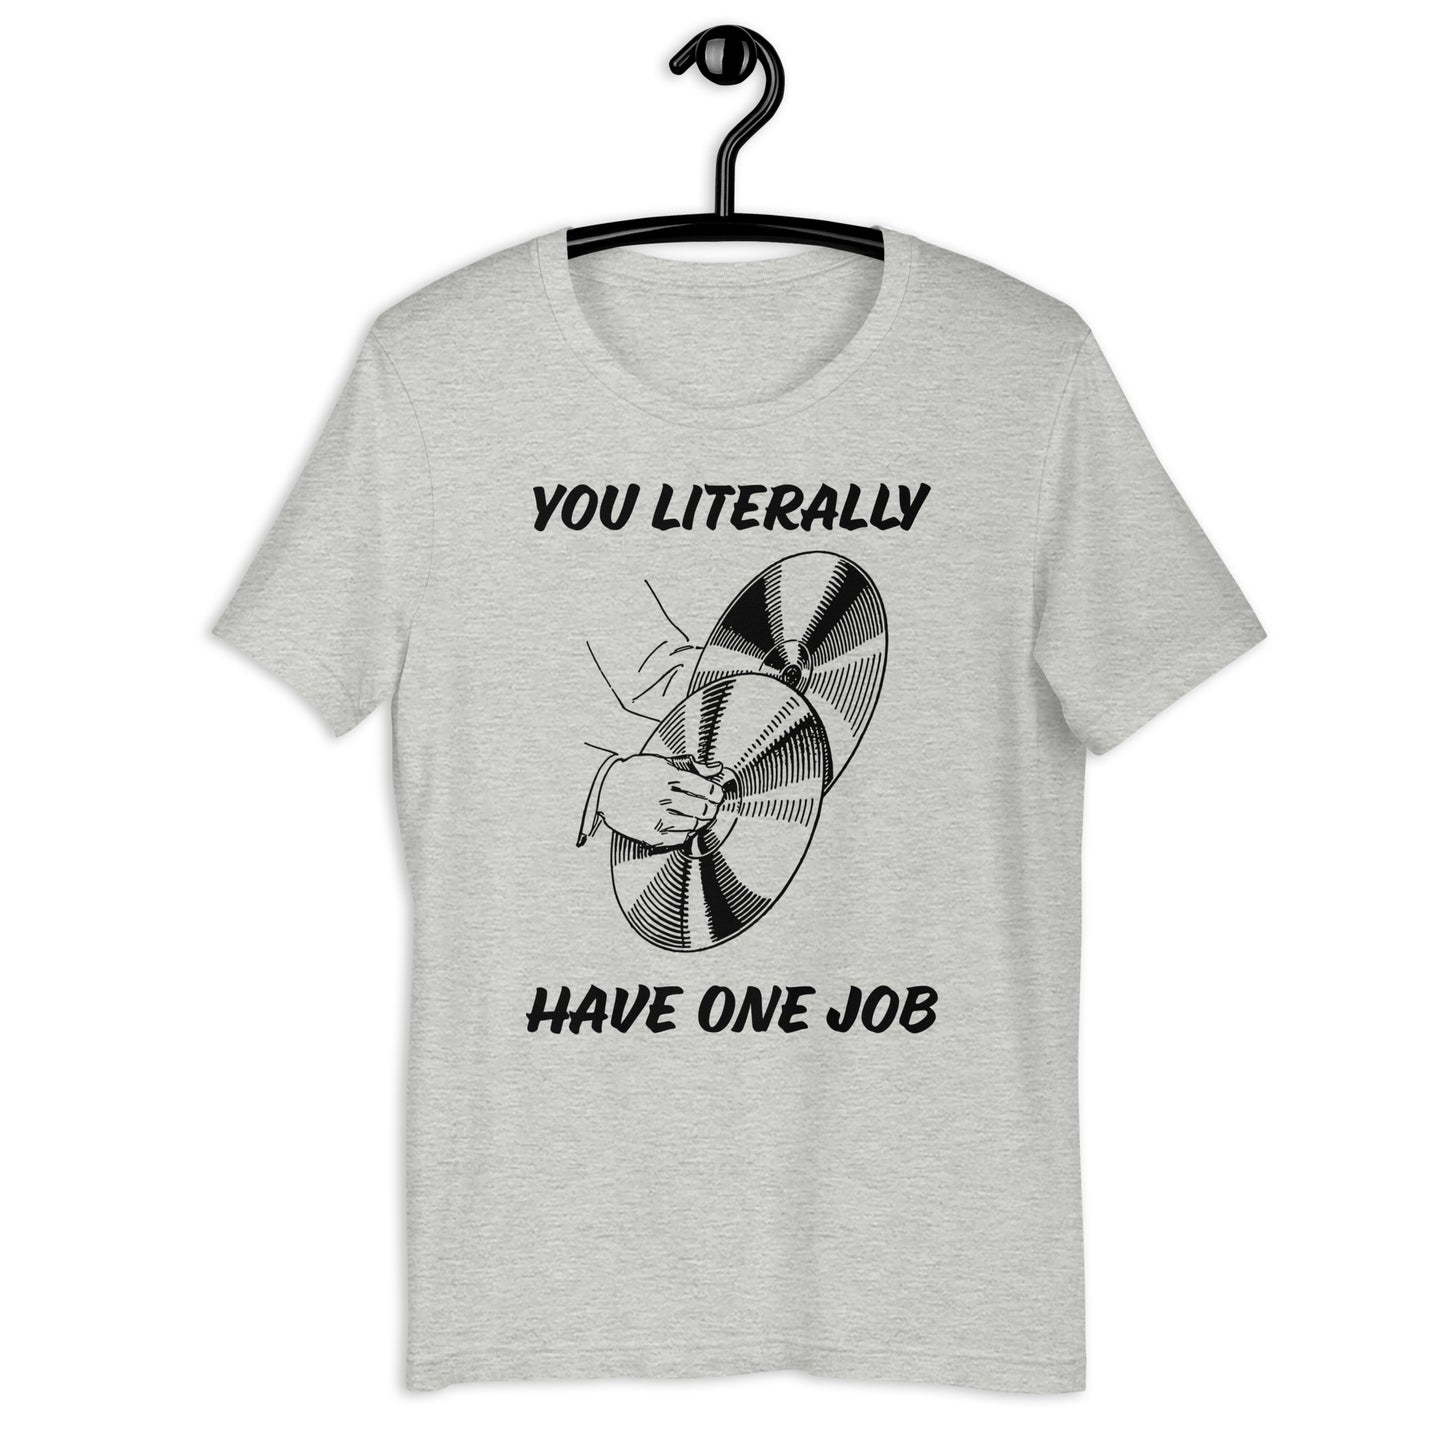 One Job Shirt